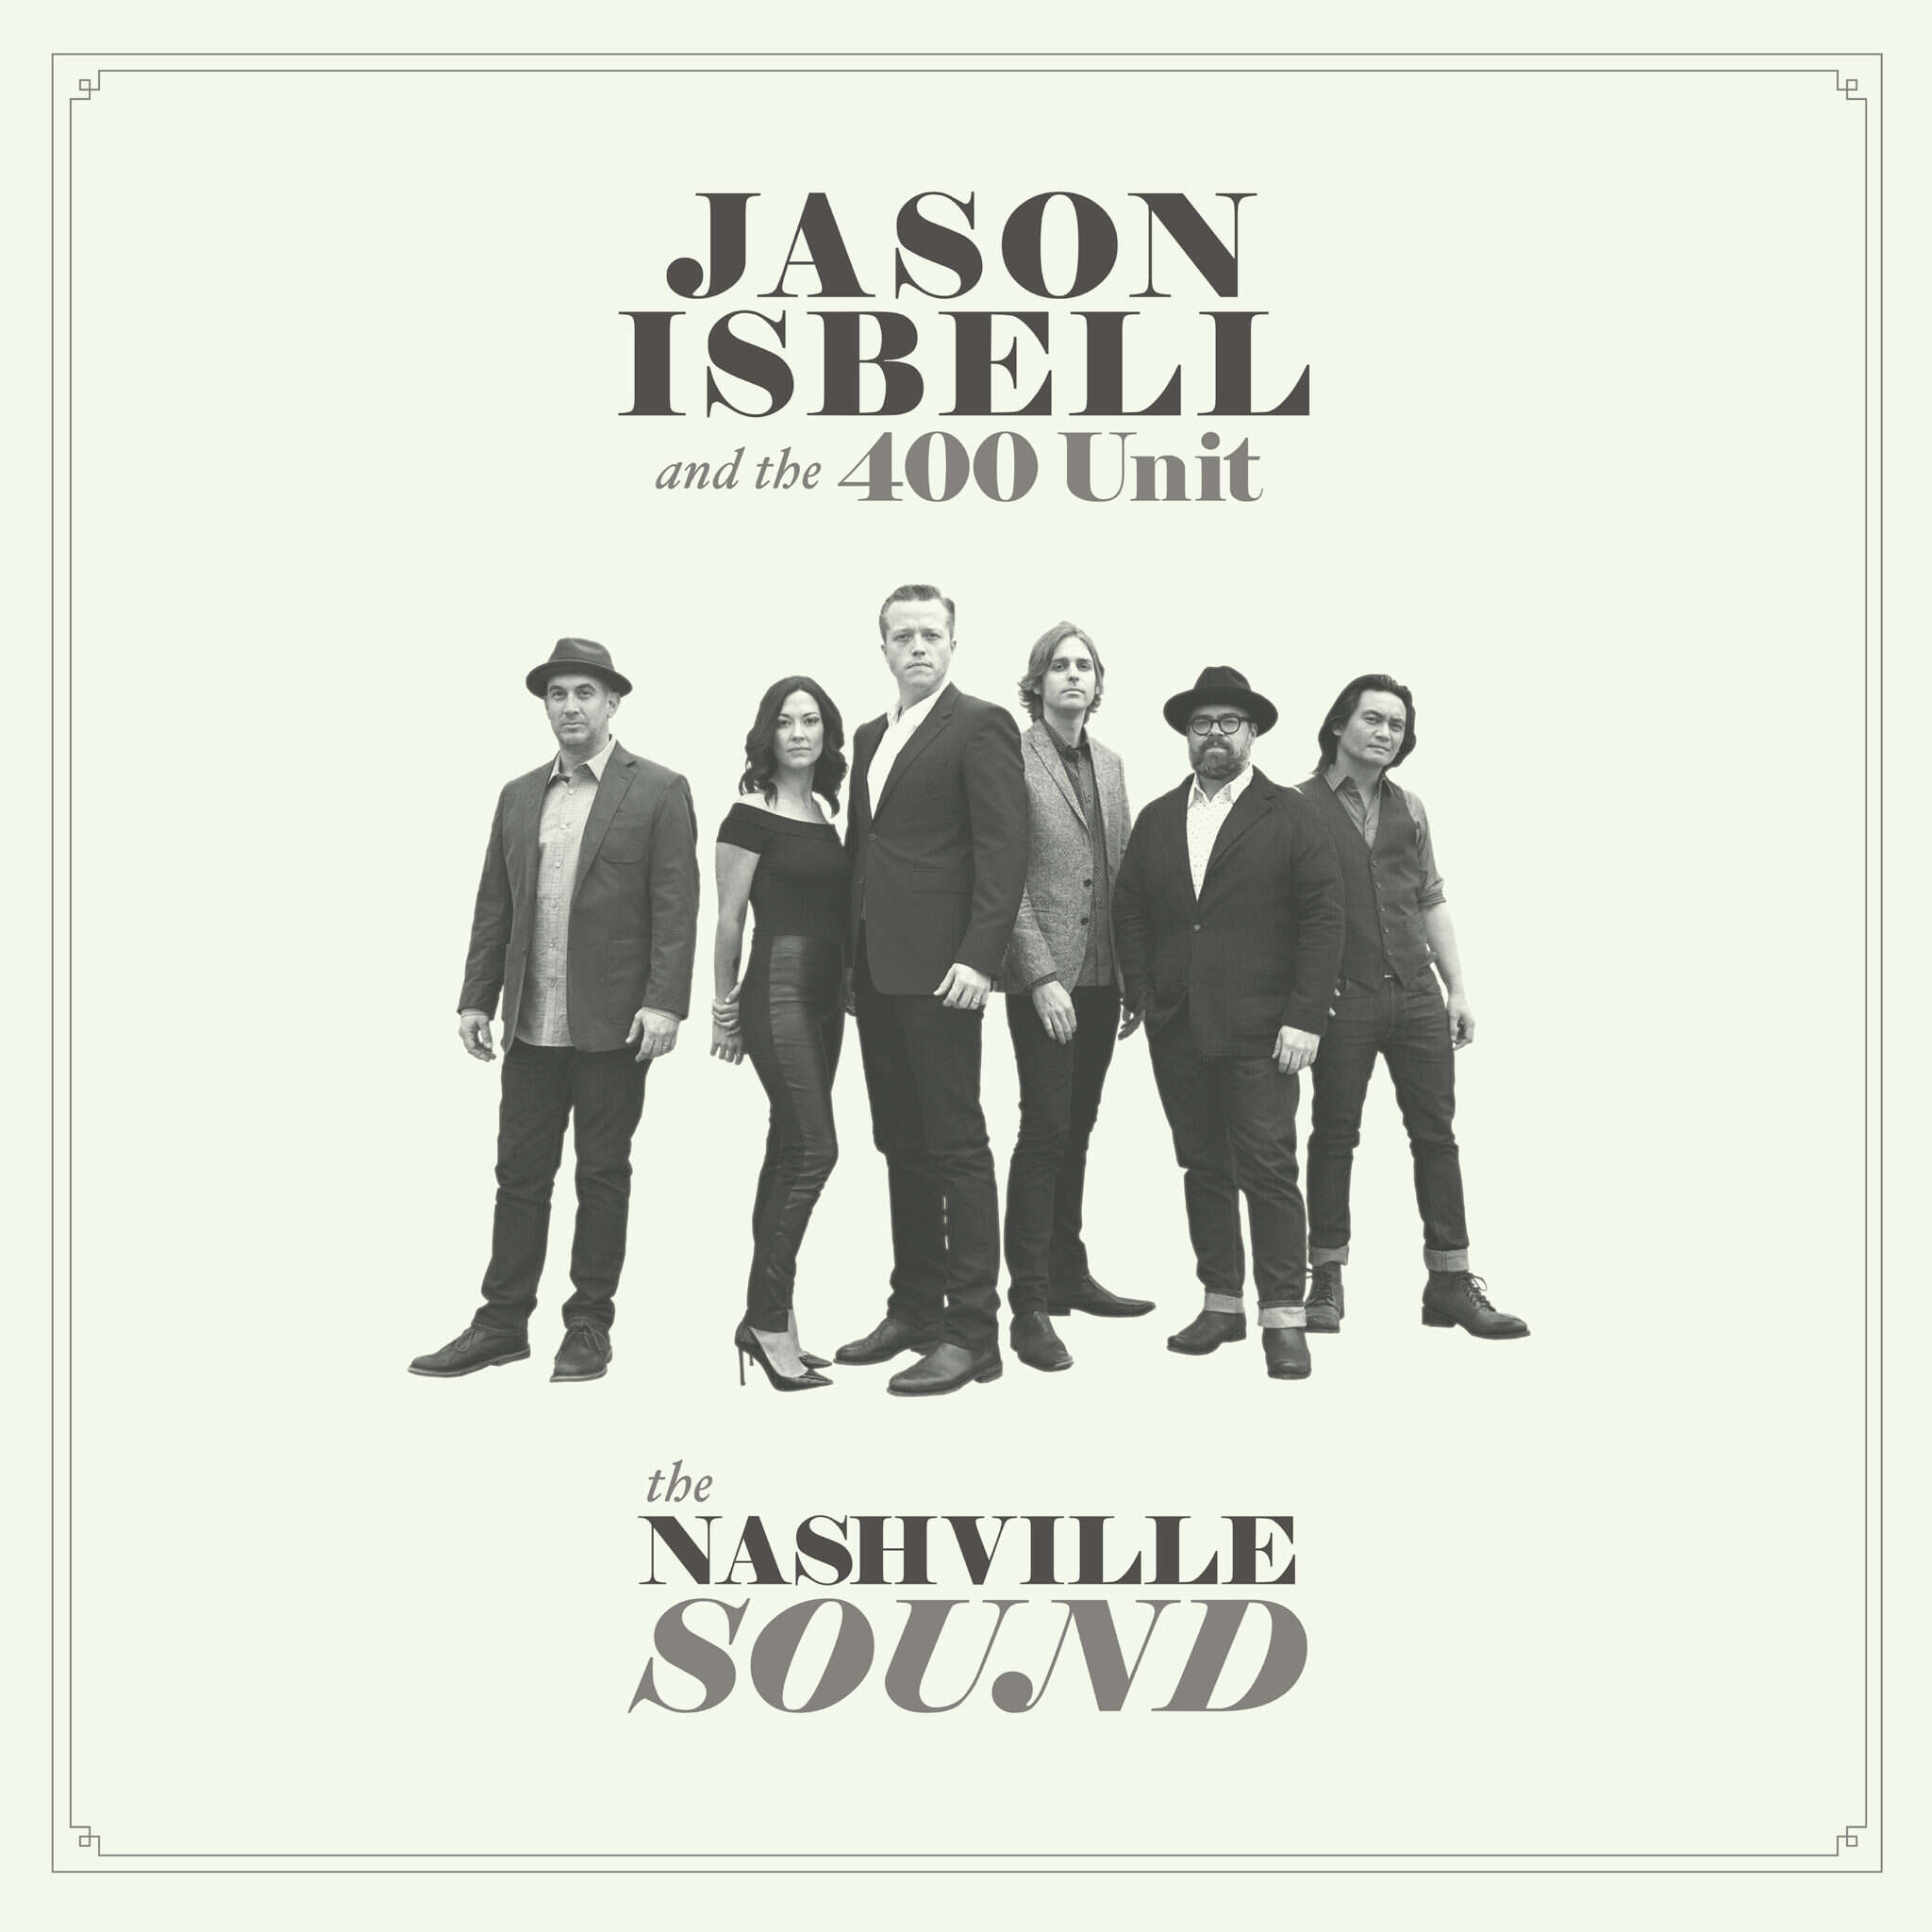 Jason Isbell and the Nashville Sound